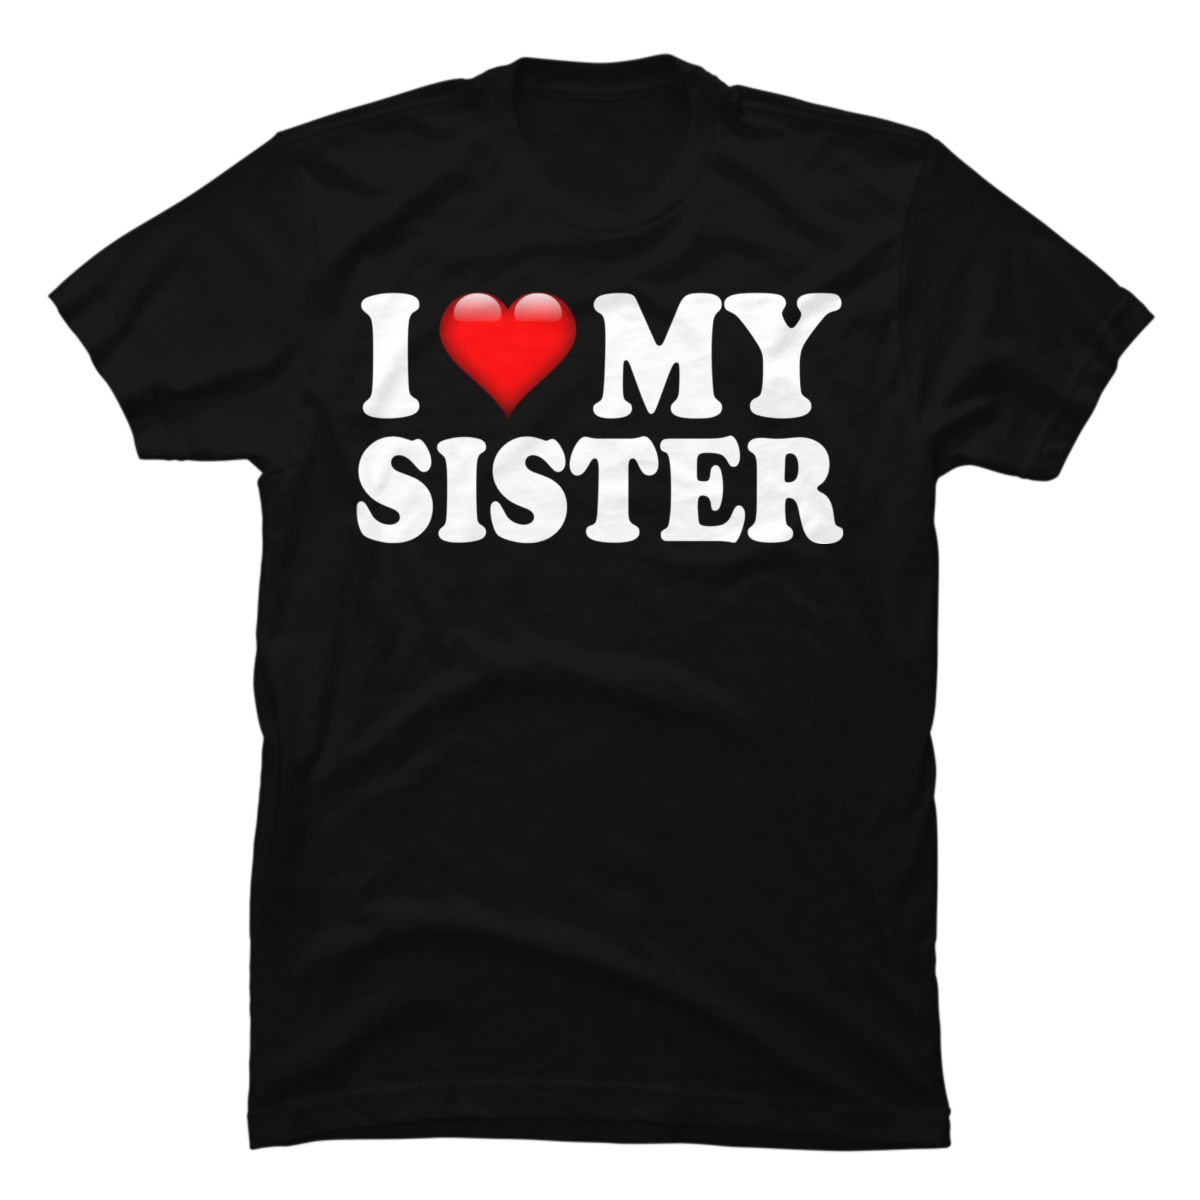 i love my sister - Buy t-shirt designs